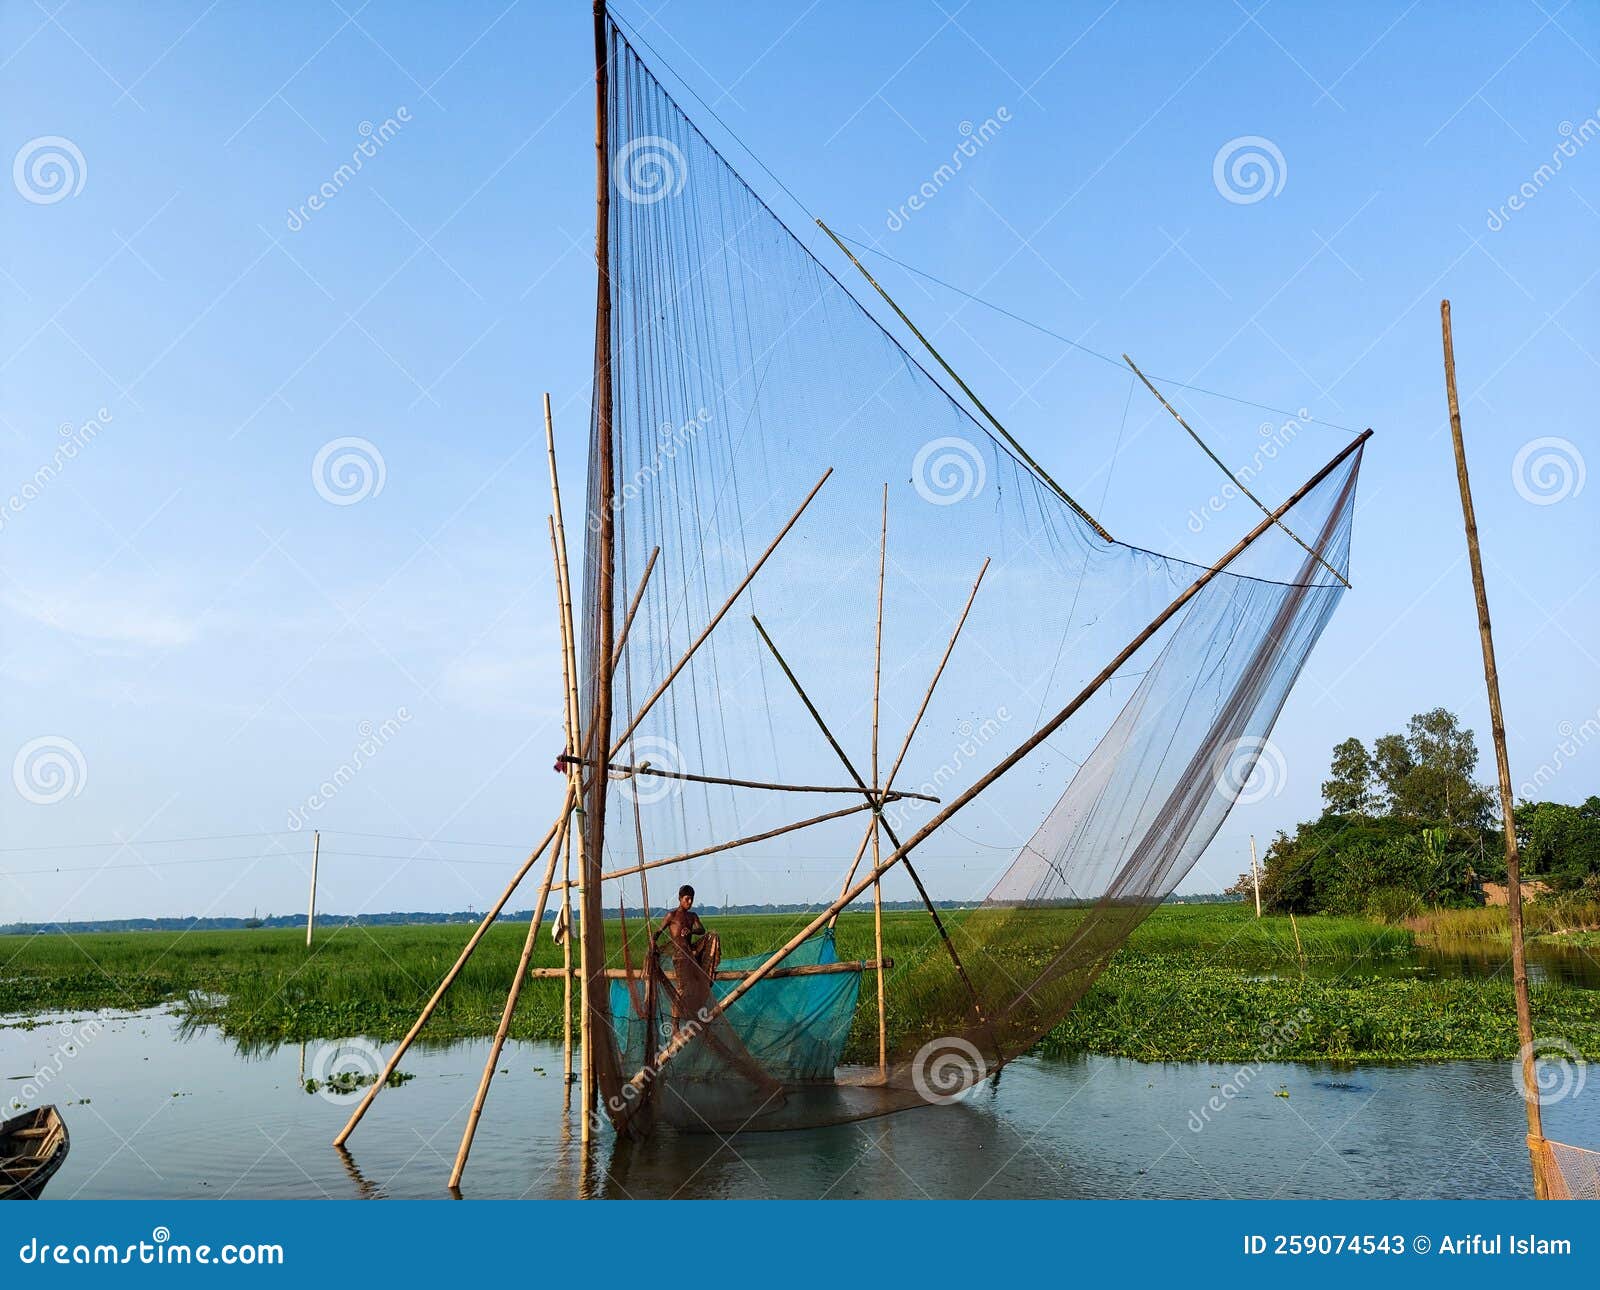 Chinese Fishing Nets or Khora Jal Stock Image - Image of marina, sail:  259074543